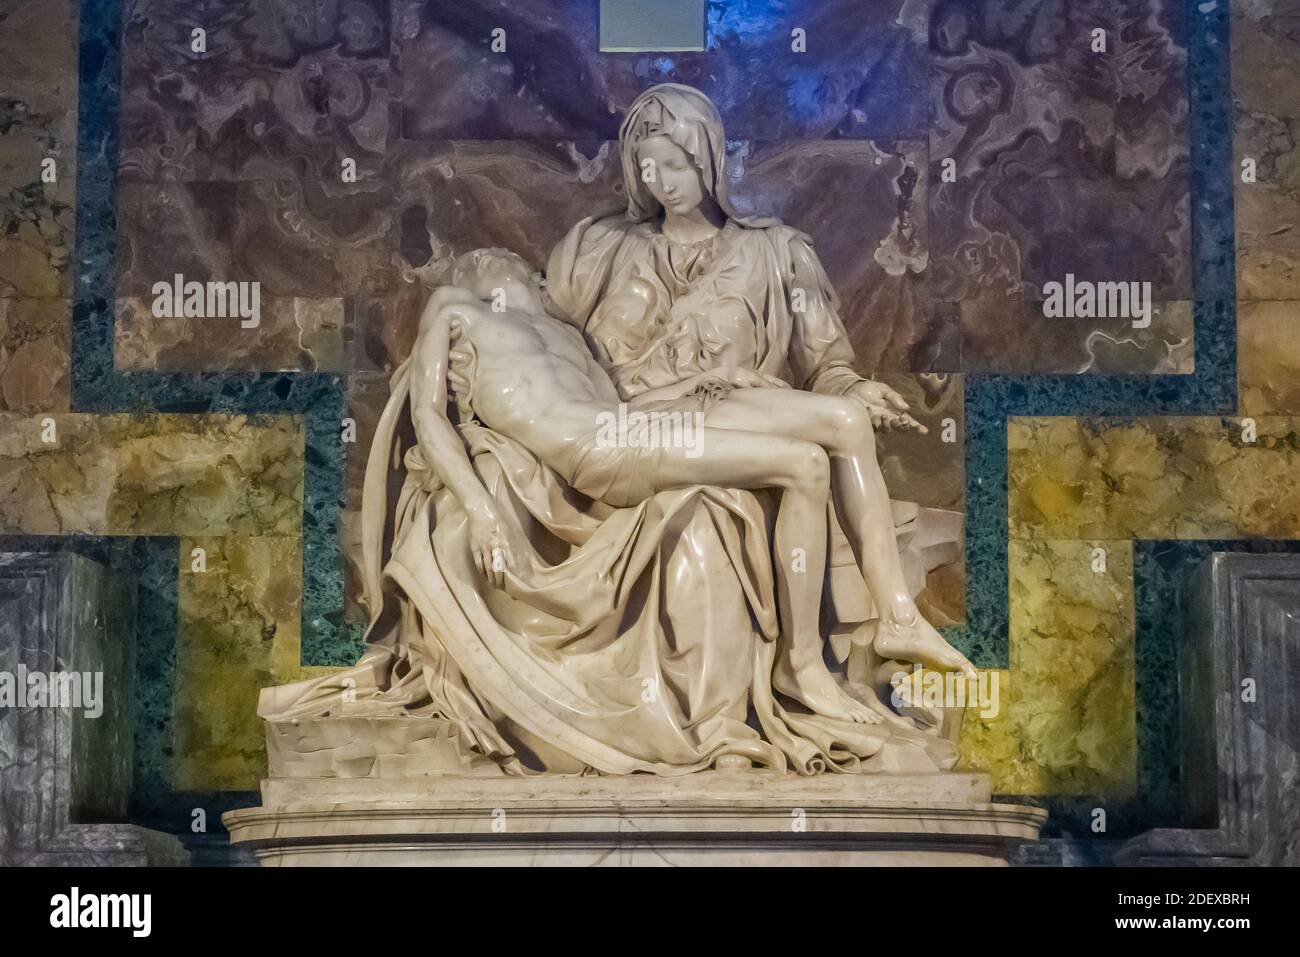 Michelangelo La Pieta statue - The blessed Virgin Mary holding dead Jesus Christ body. Stock Photo